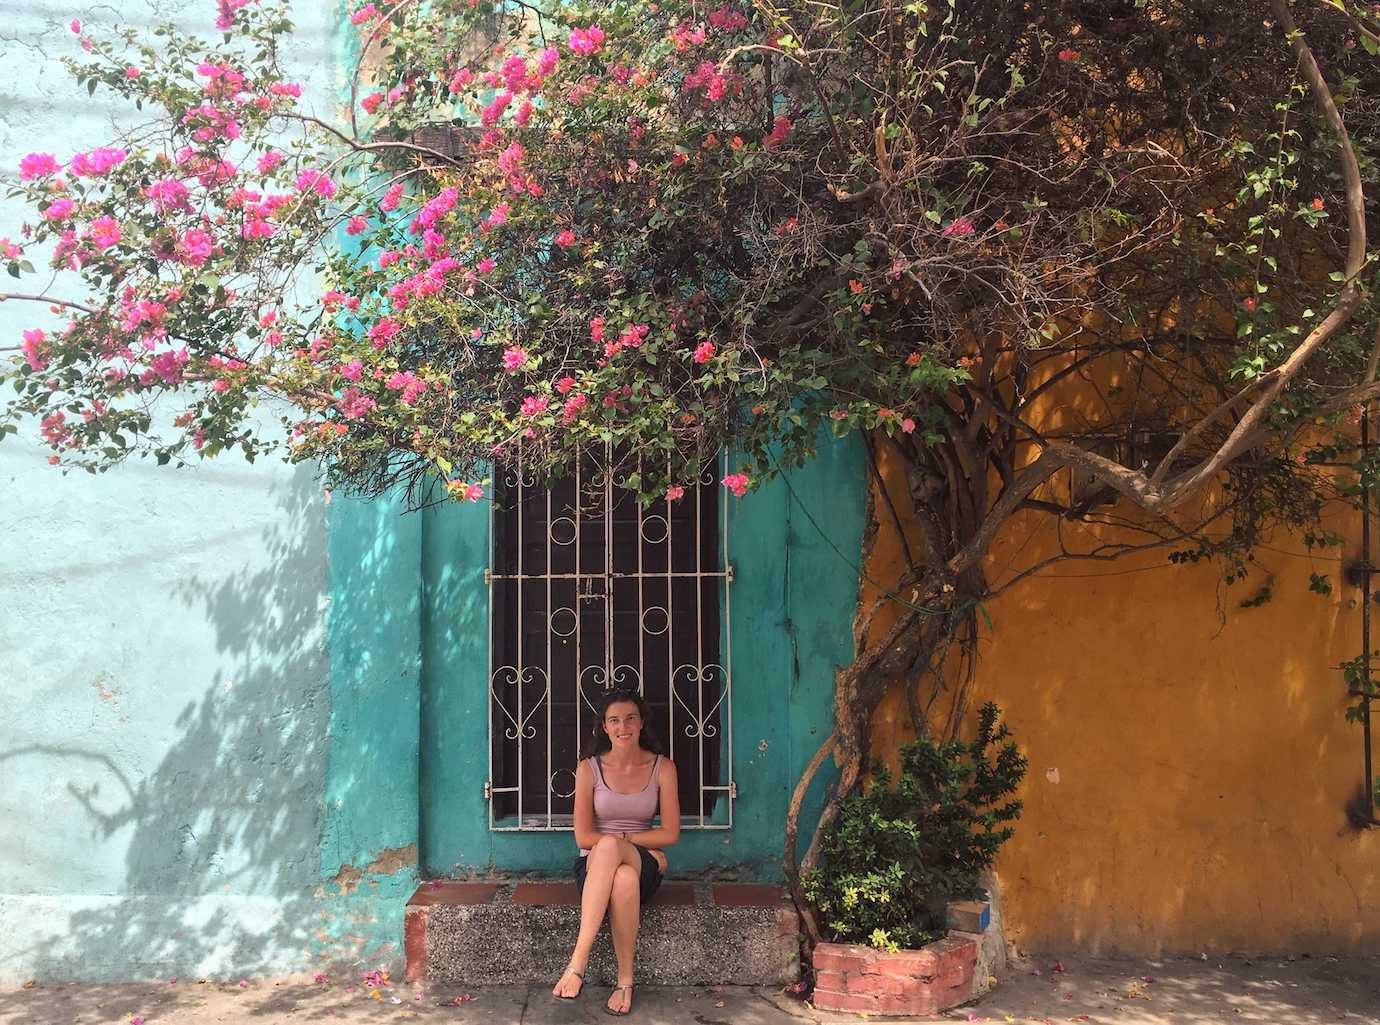 Wandering Cartagena’s beautiful streets